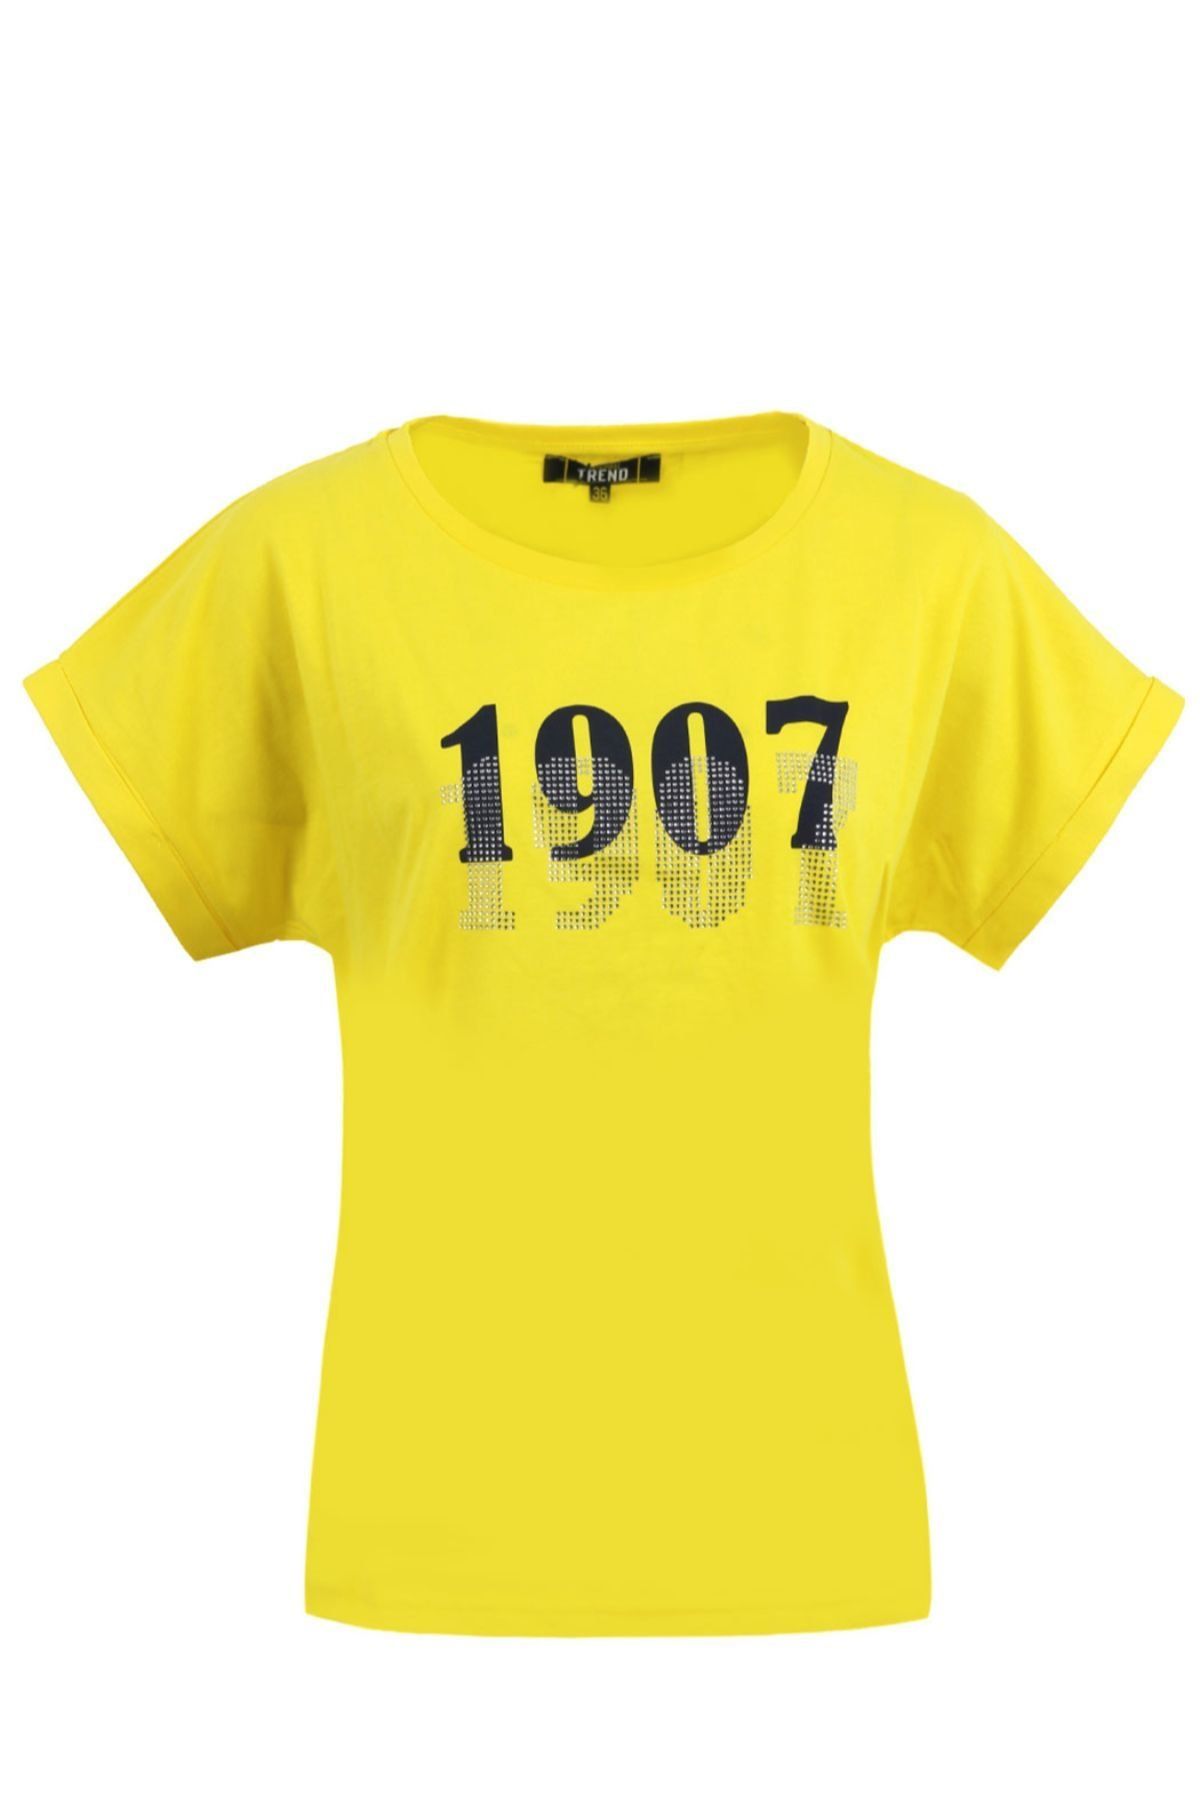 Fenerbahçe KADIN TREND 1907 T-SHIRT